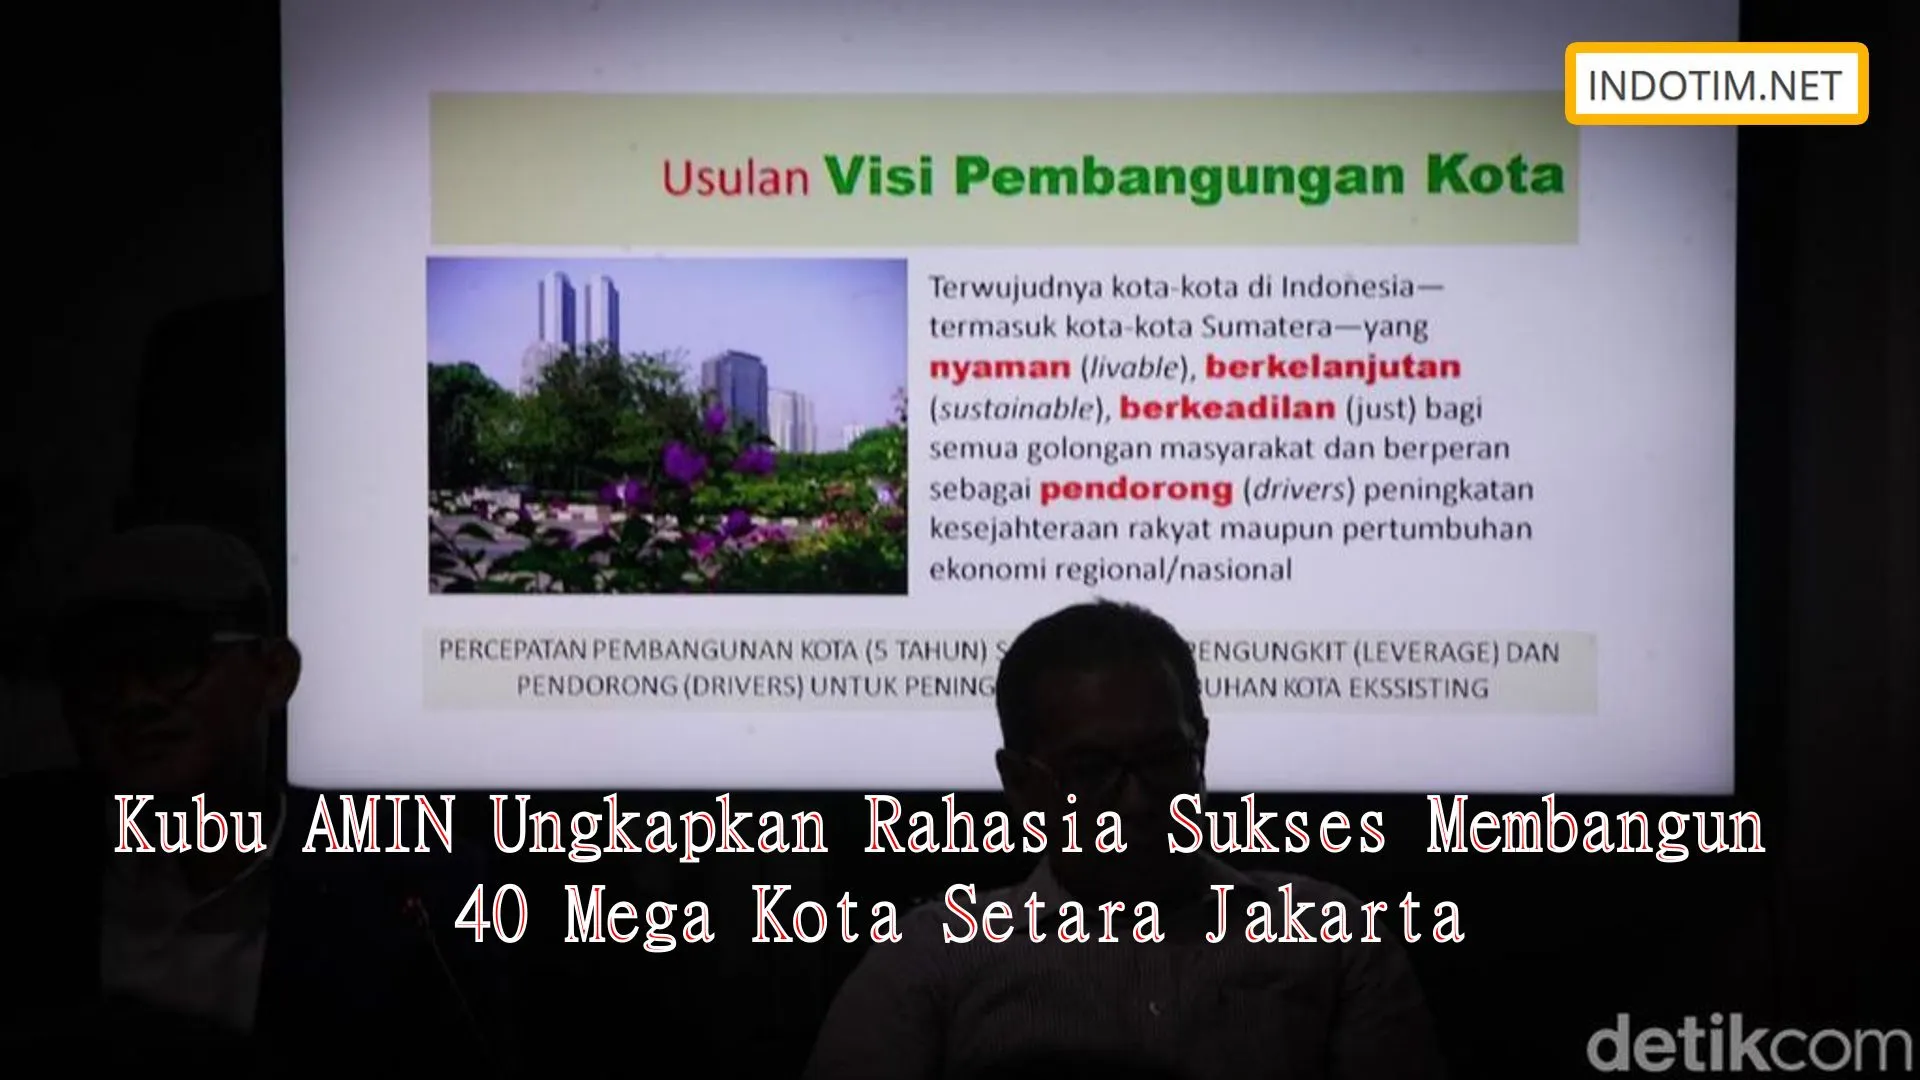 Kubu AMIN Ungkapkan Rahasia Sukses Membangun 40 Mega Kota Setara Jakarta